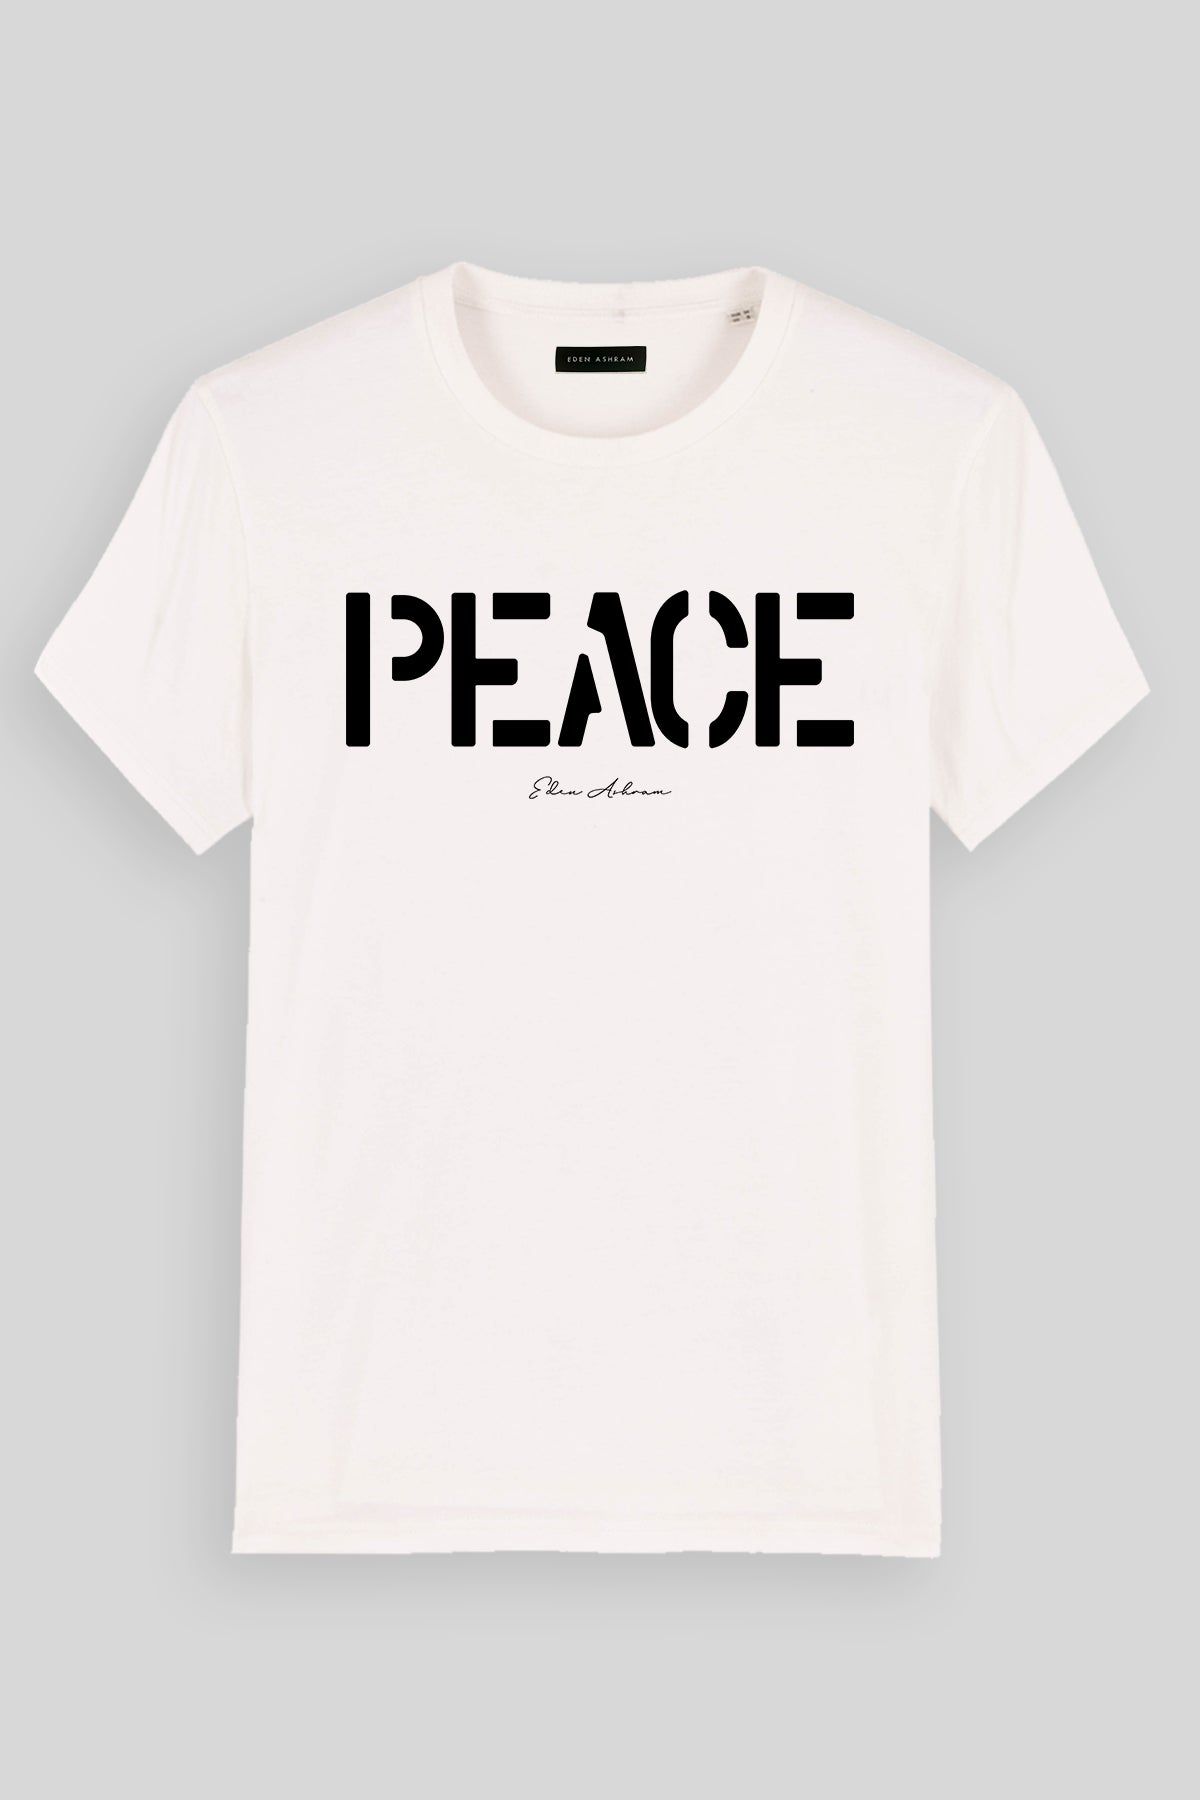 EDEN ASHRAM PEACE - Premium Classic T-Shirt Vintage White